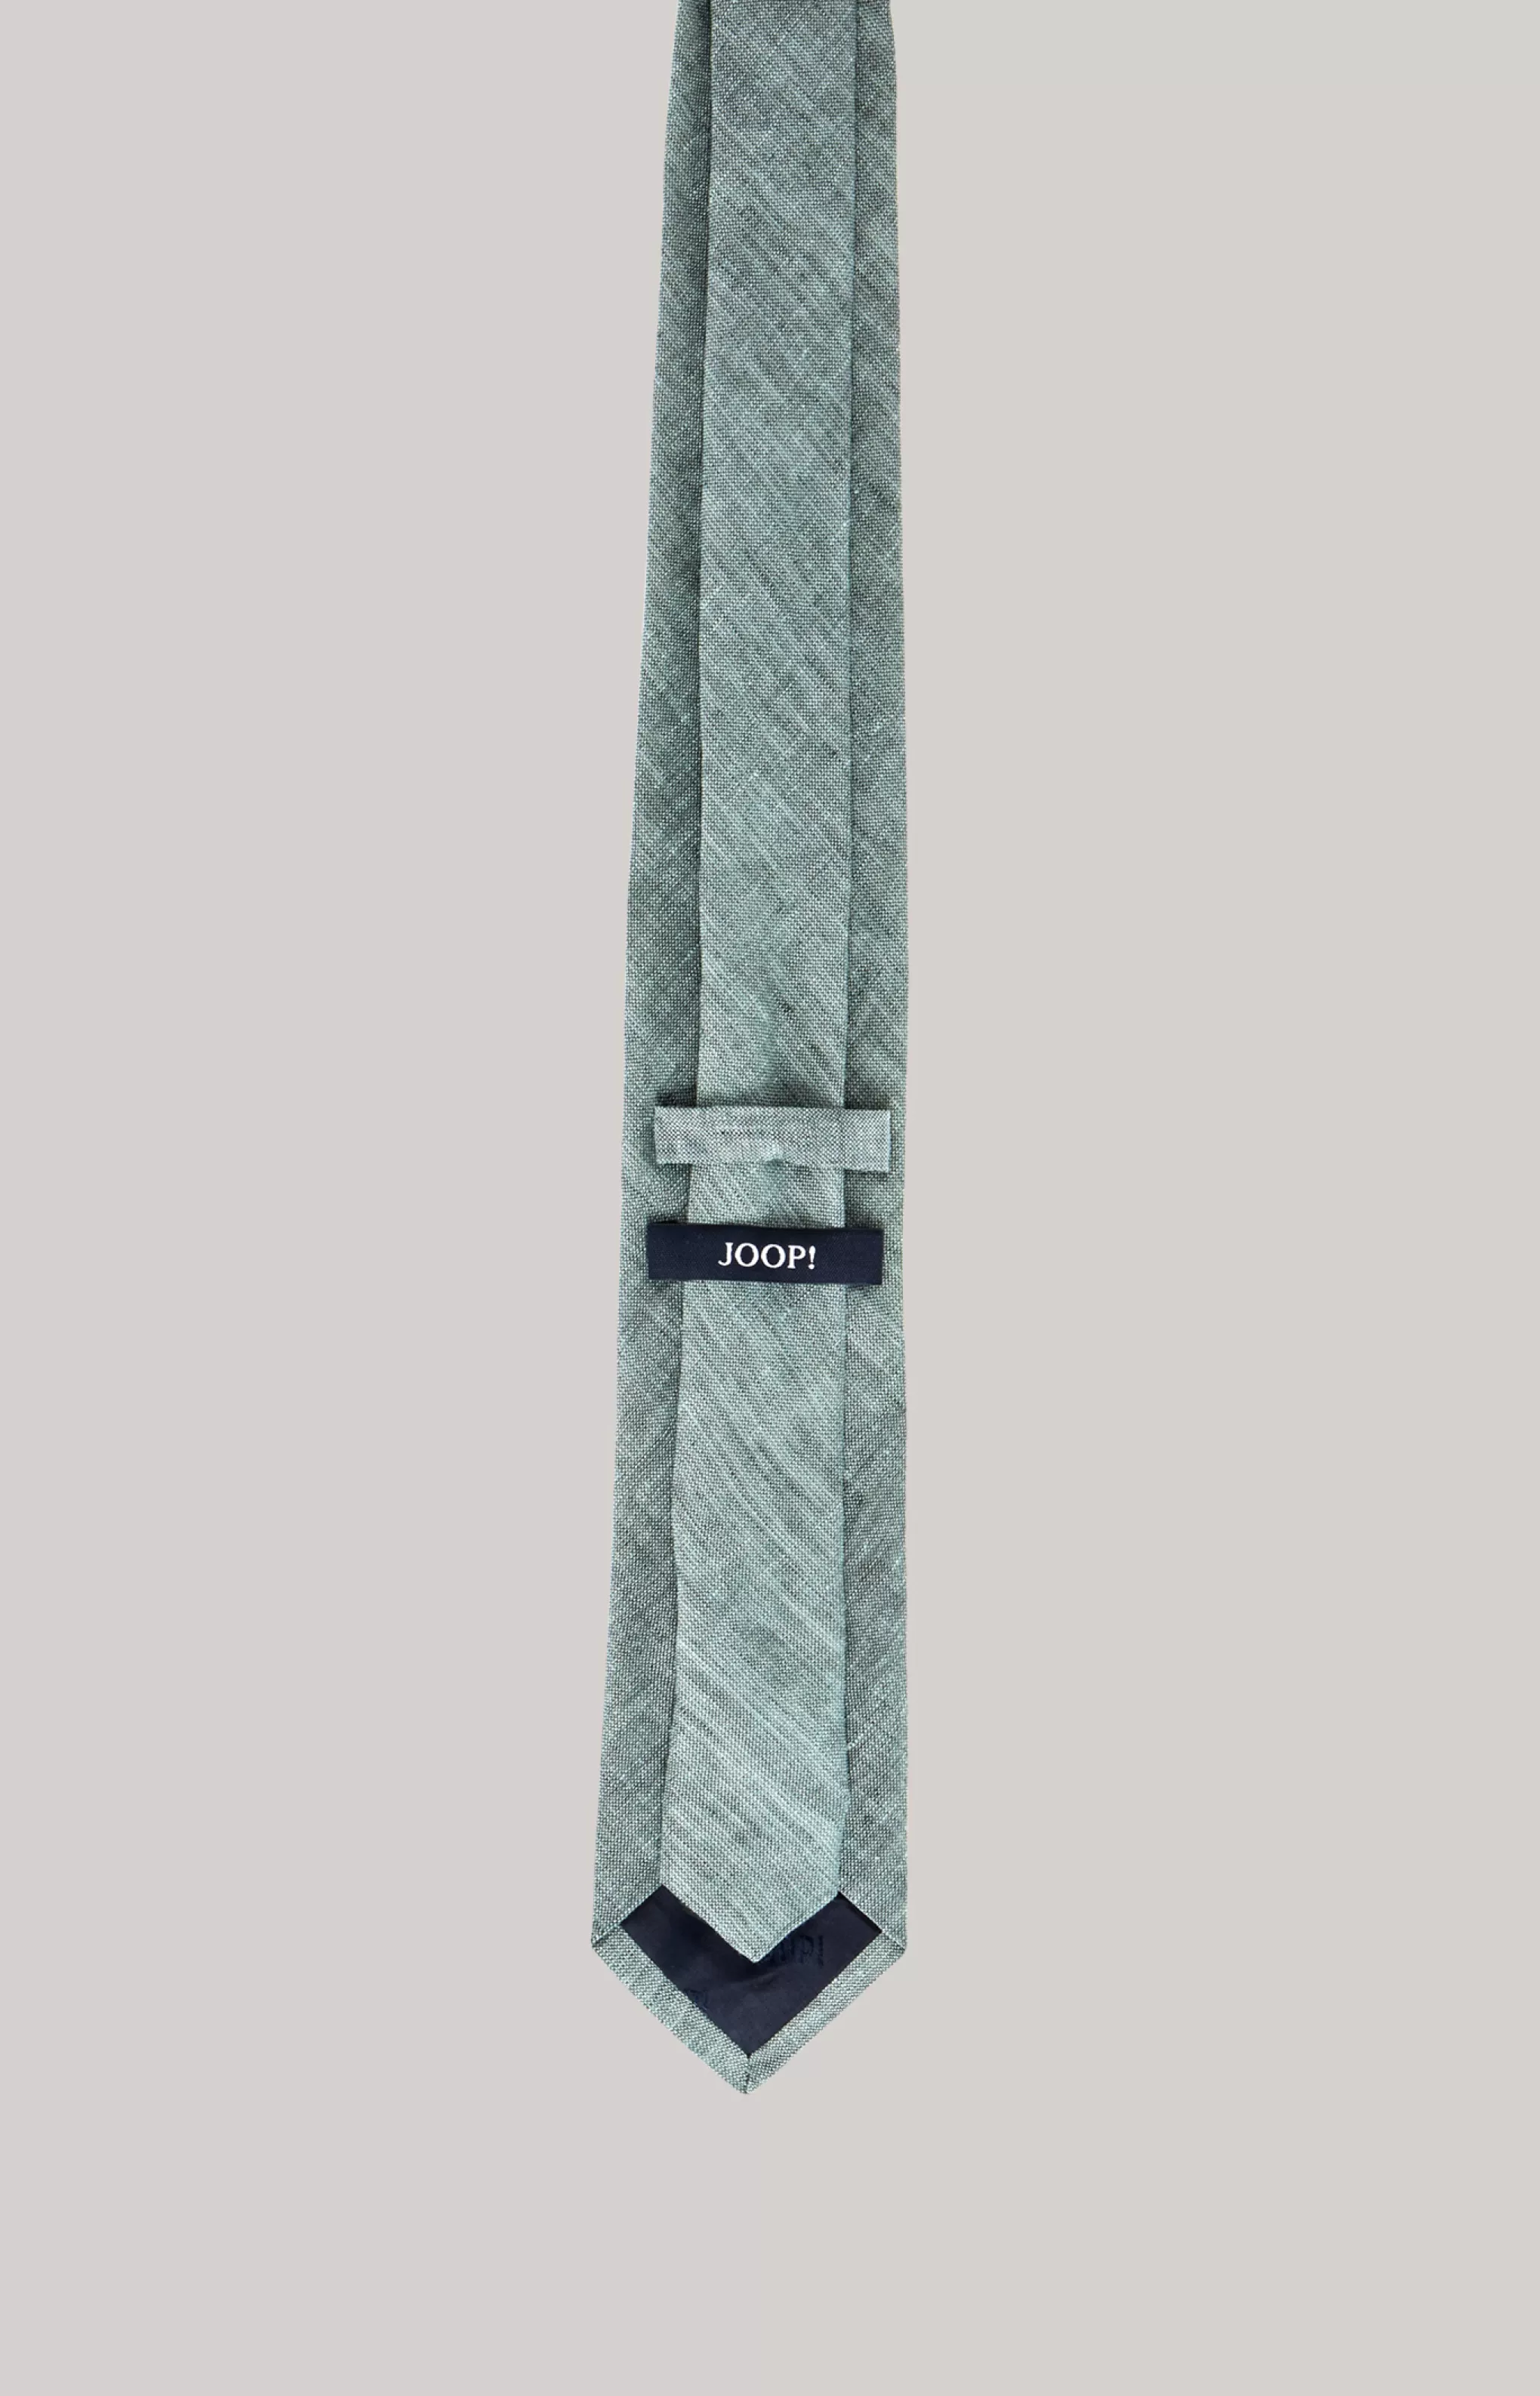 Ties & Bow Ties*JOOP Ties & Bow Ties Linen Tie in Mottled Medium Green